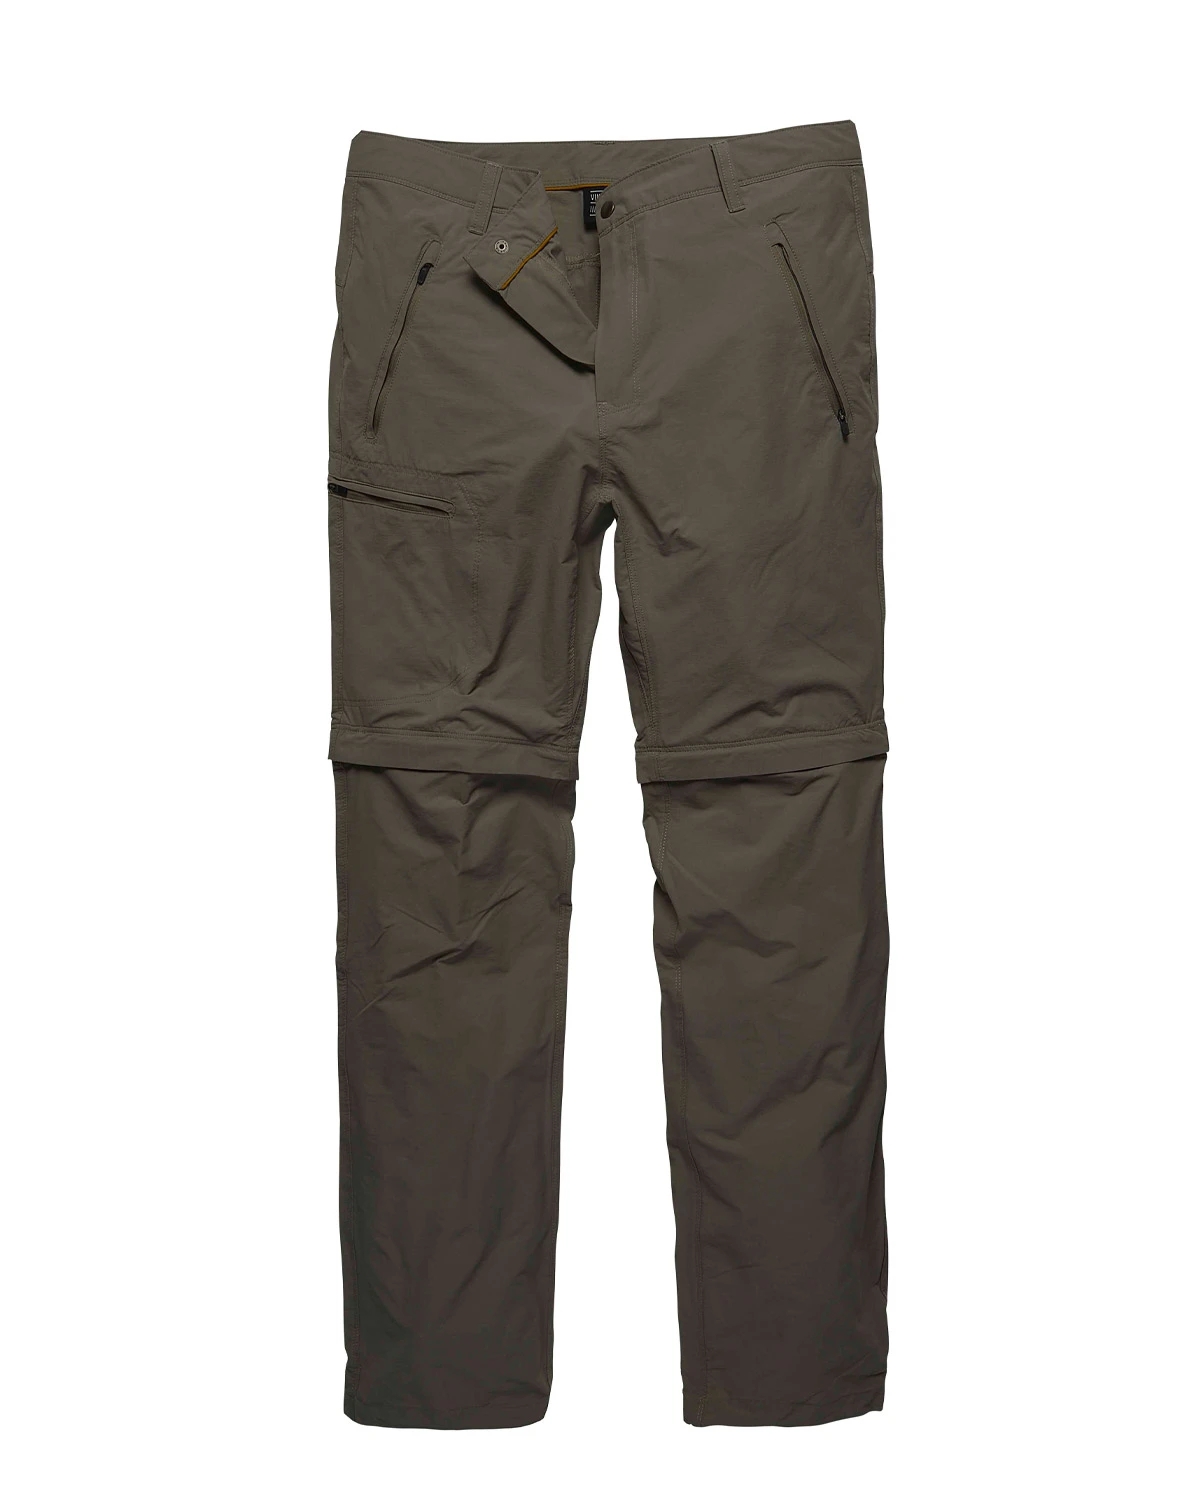 Zambezi Convertible Zip off Safari Pants for Men | TAG® Safari